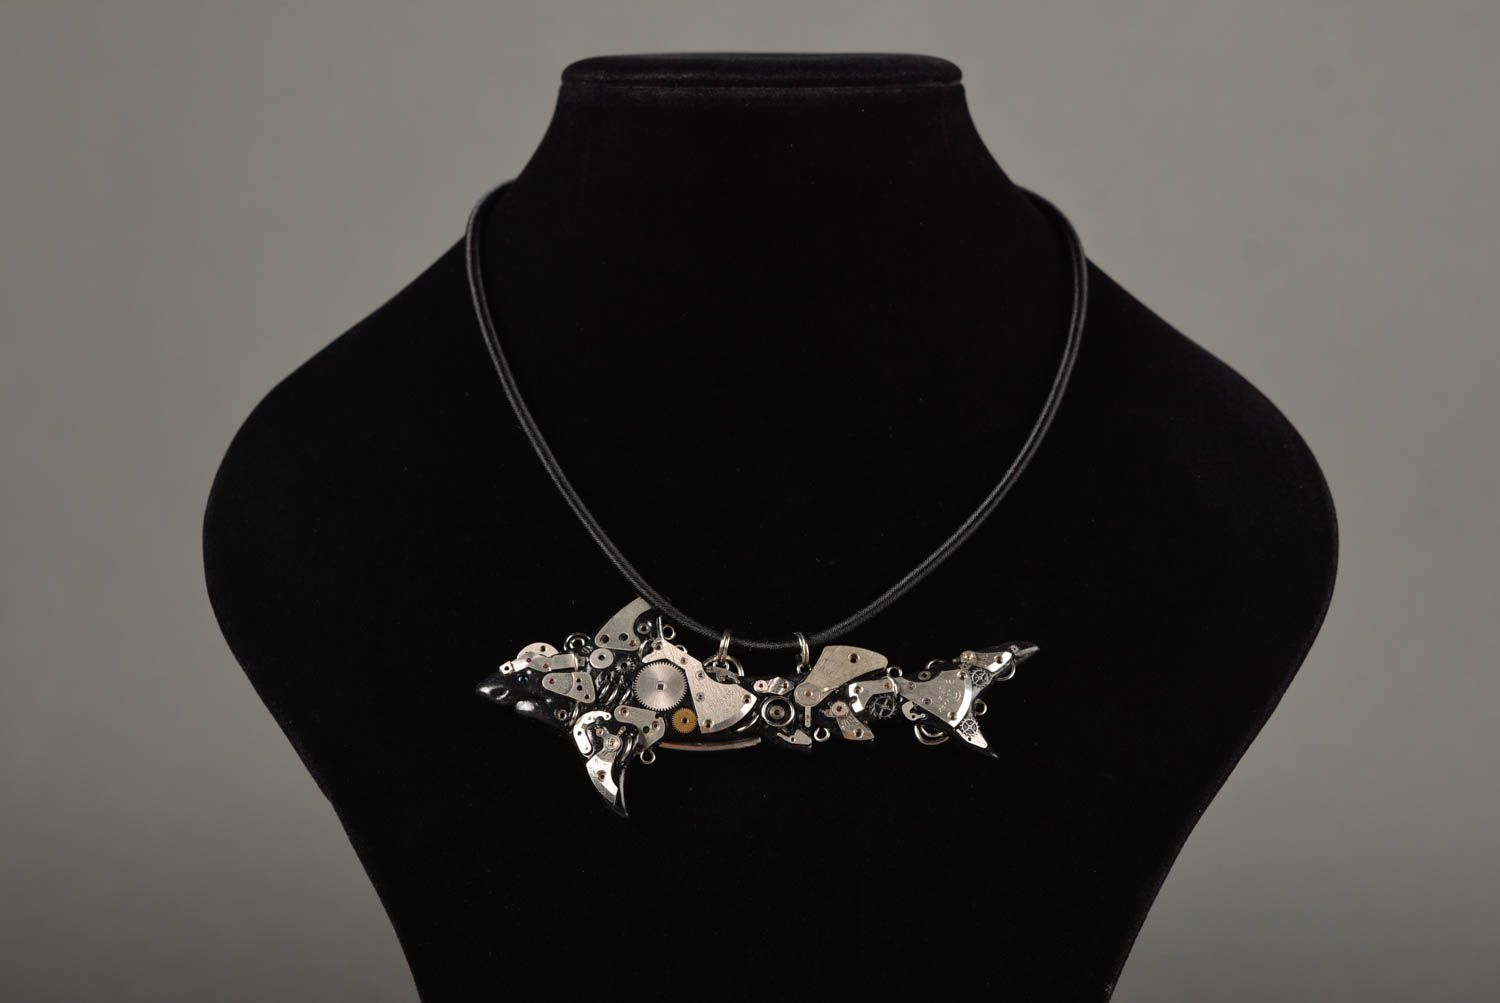 Unusual handmade metal pendant steampunk style jewelry designs gift ideas photo 2